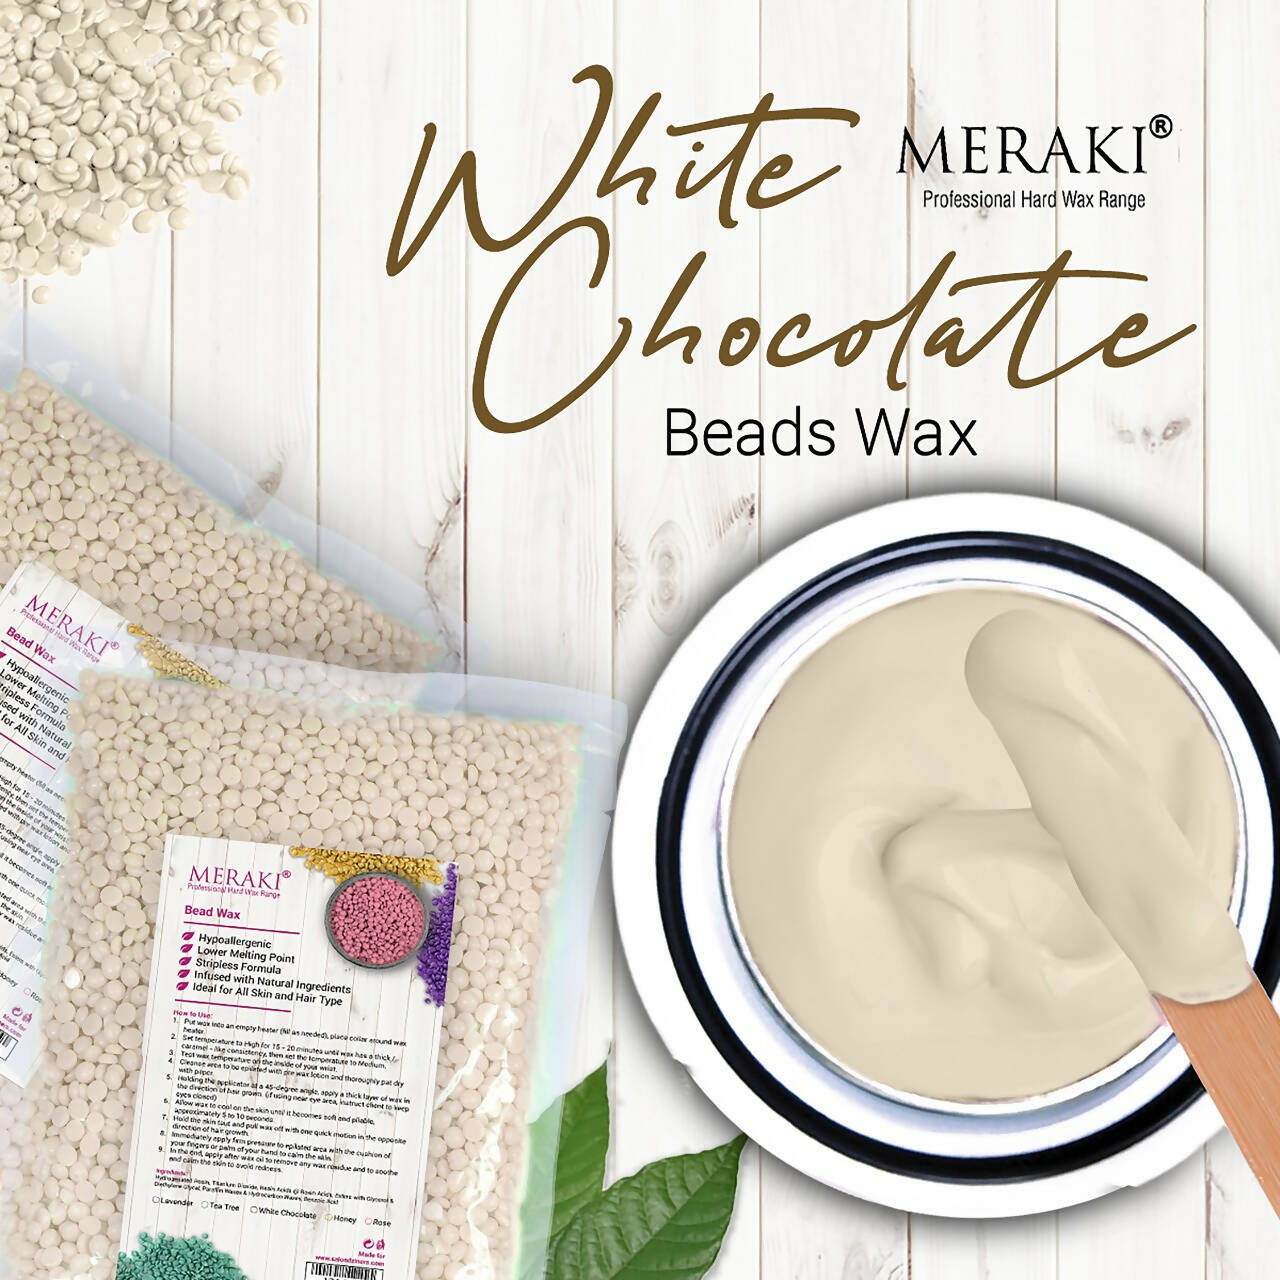 Meraki Stripless, Hair Removal Wax, White Chocolate Cream - 500g